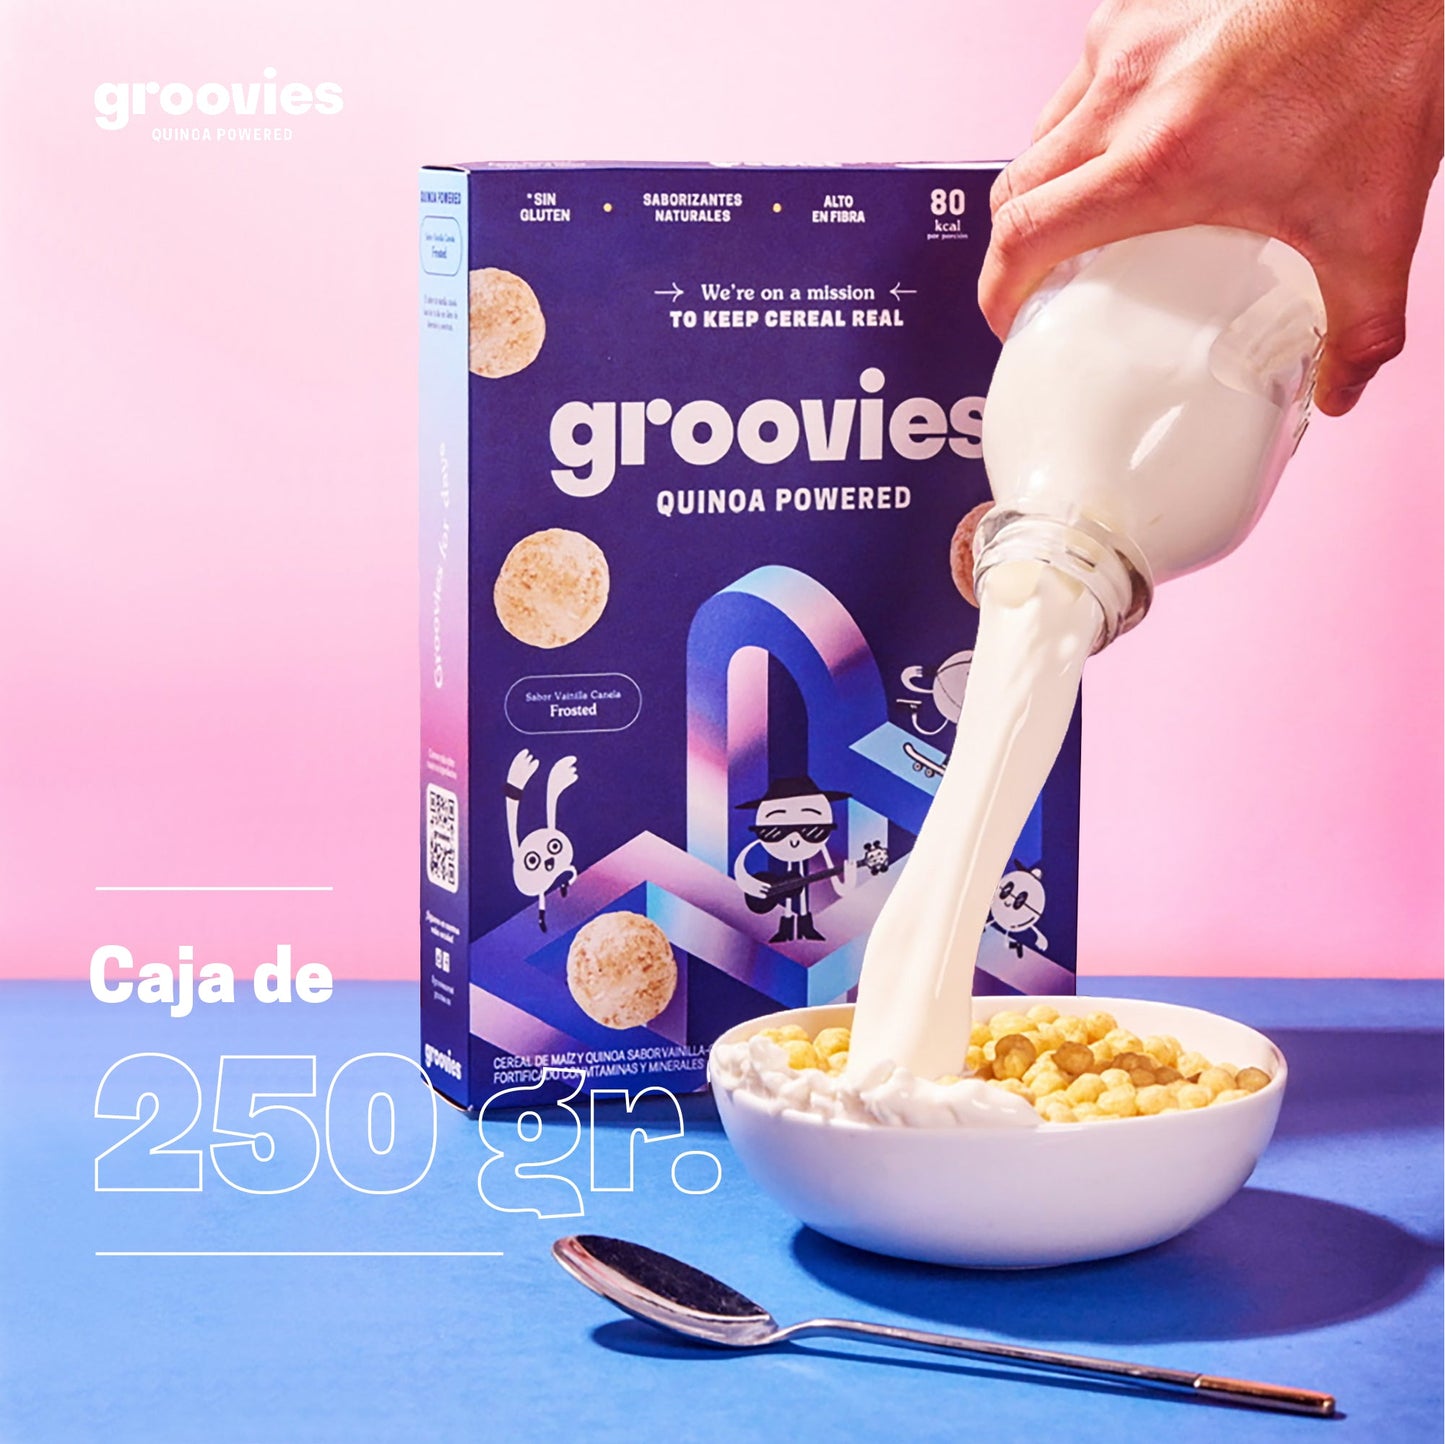 Cereal Saludable para niños. Groovies Quinoa Powered, 0 azúcar. Caja mixta 2 Pzs de 250g.